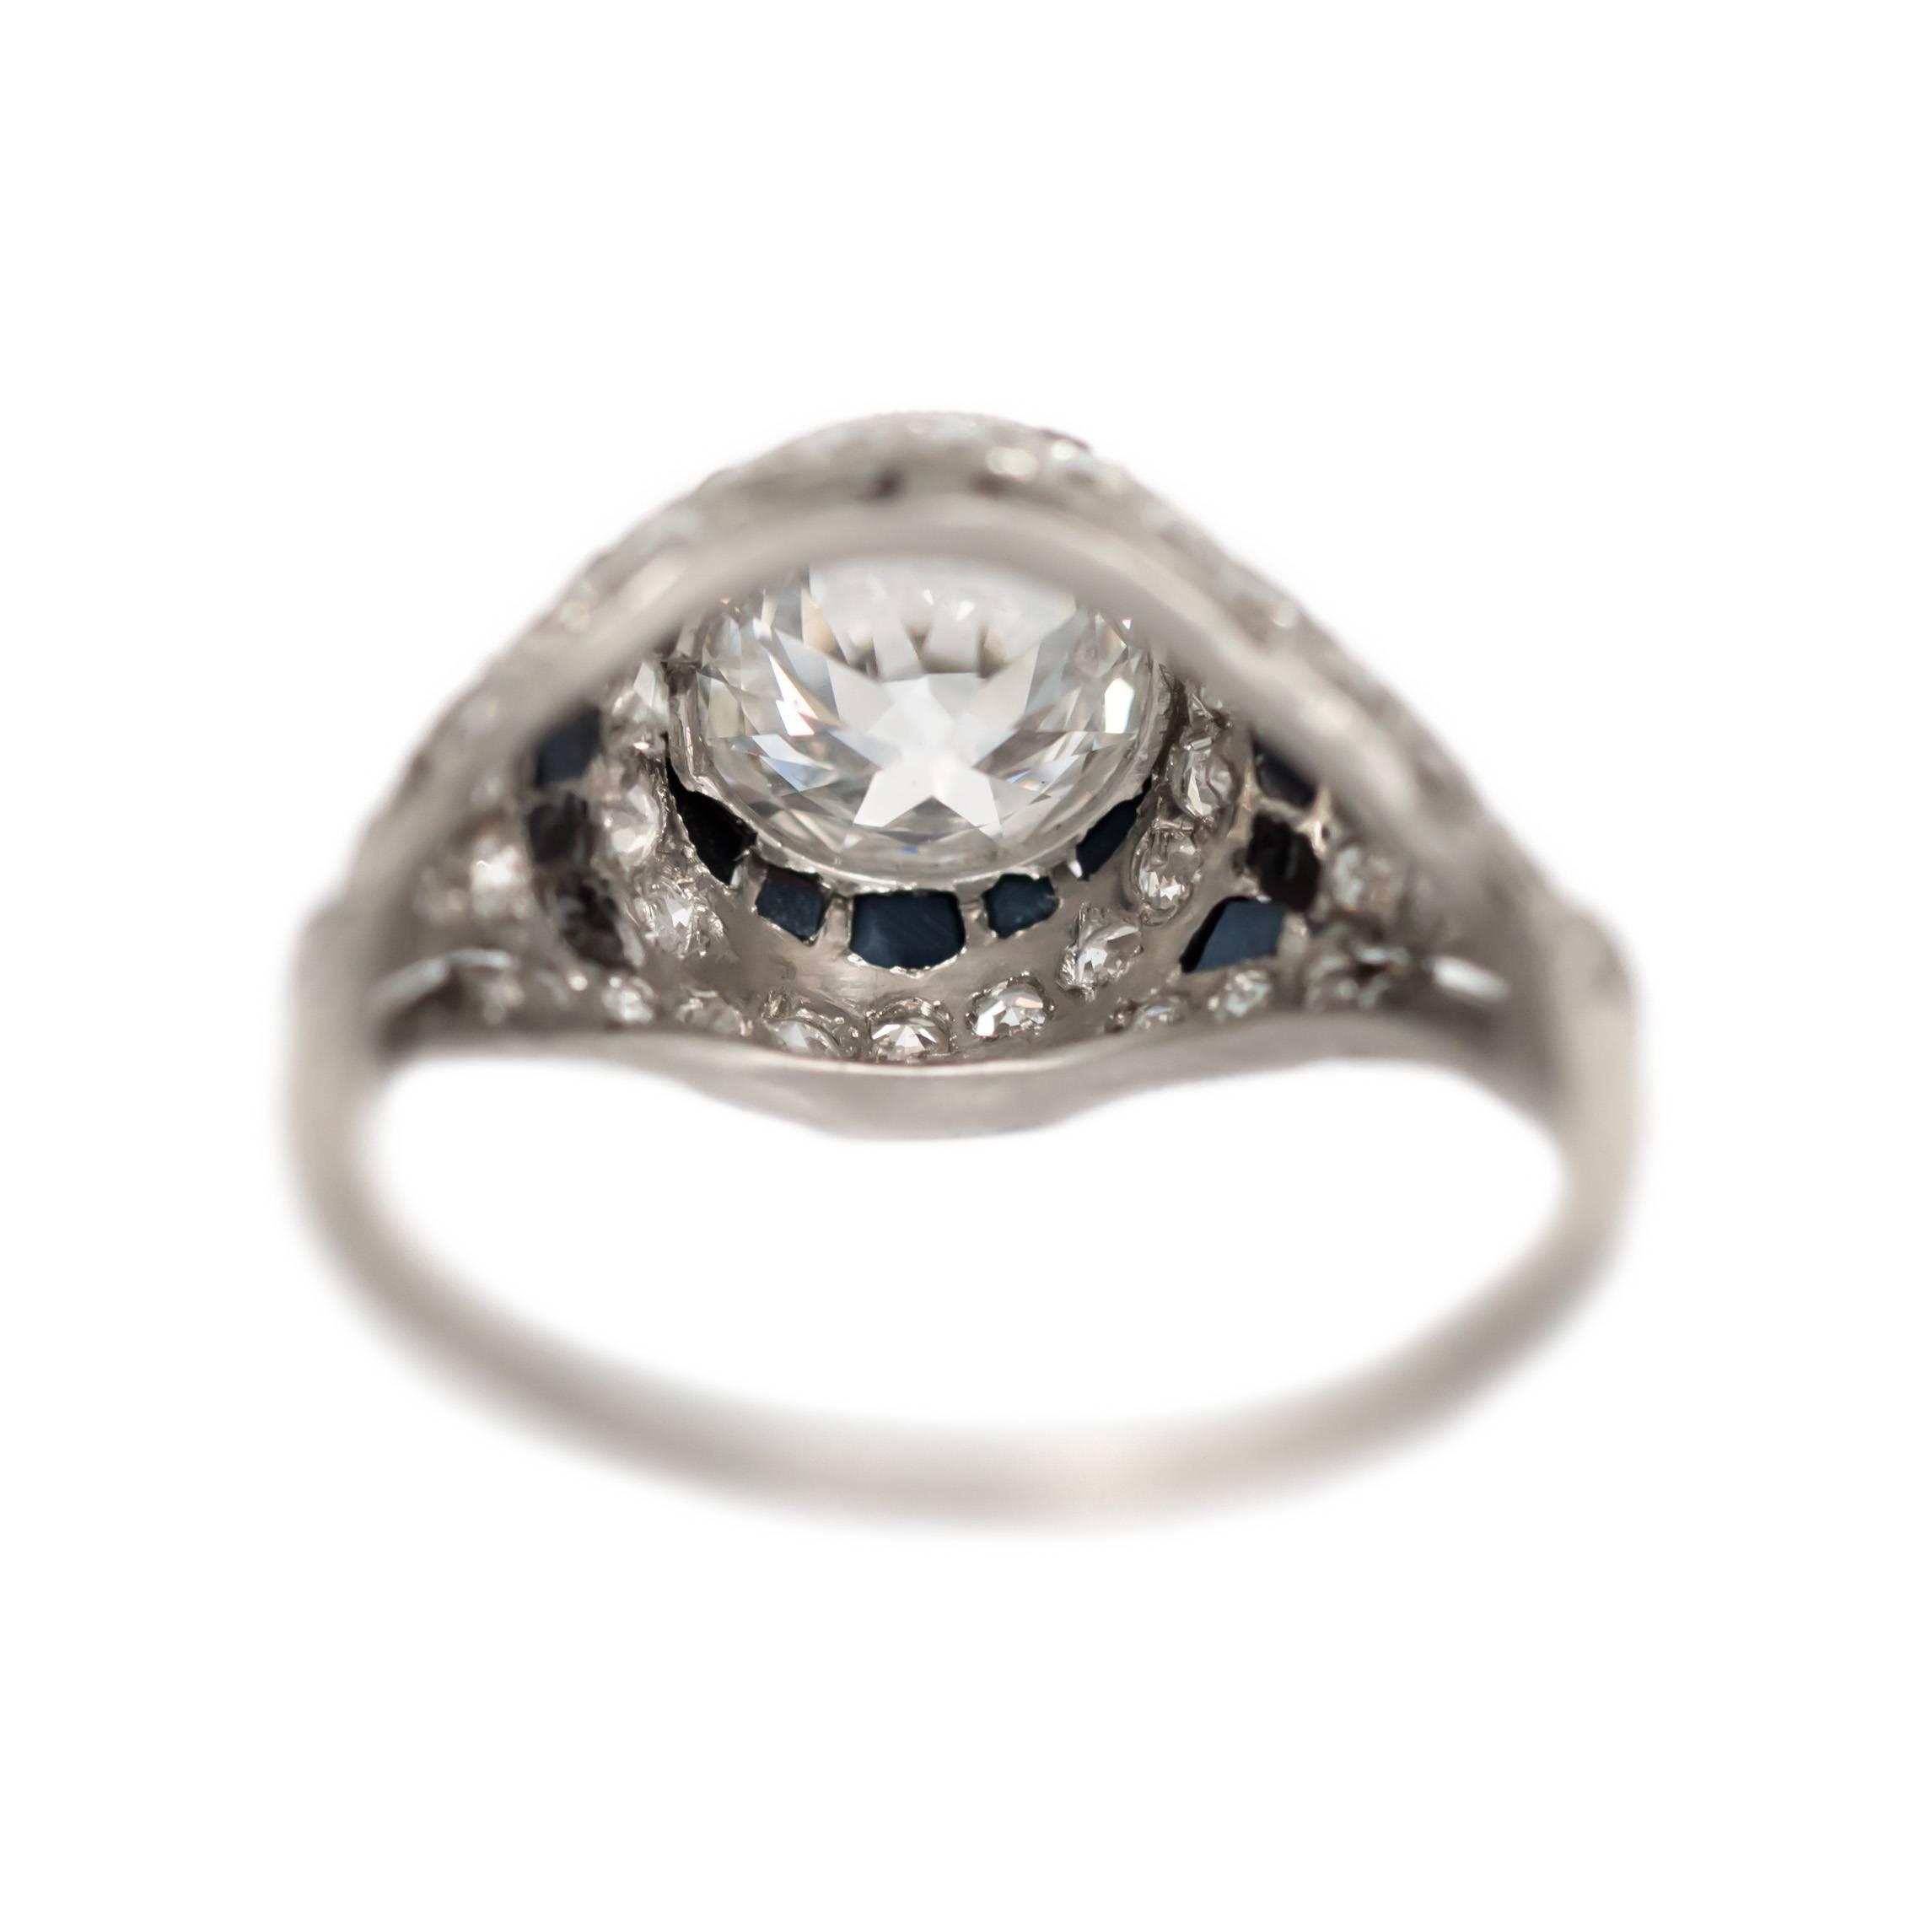 Women's 1.11 GIA Certified Carat Diamond, Onyx Platinum Engagement Ring, 1920s Art Deco